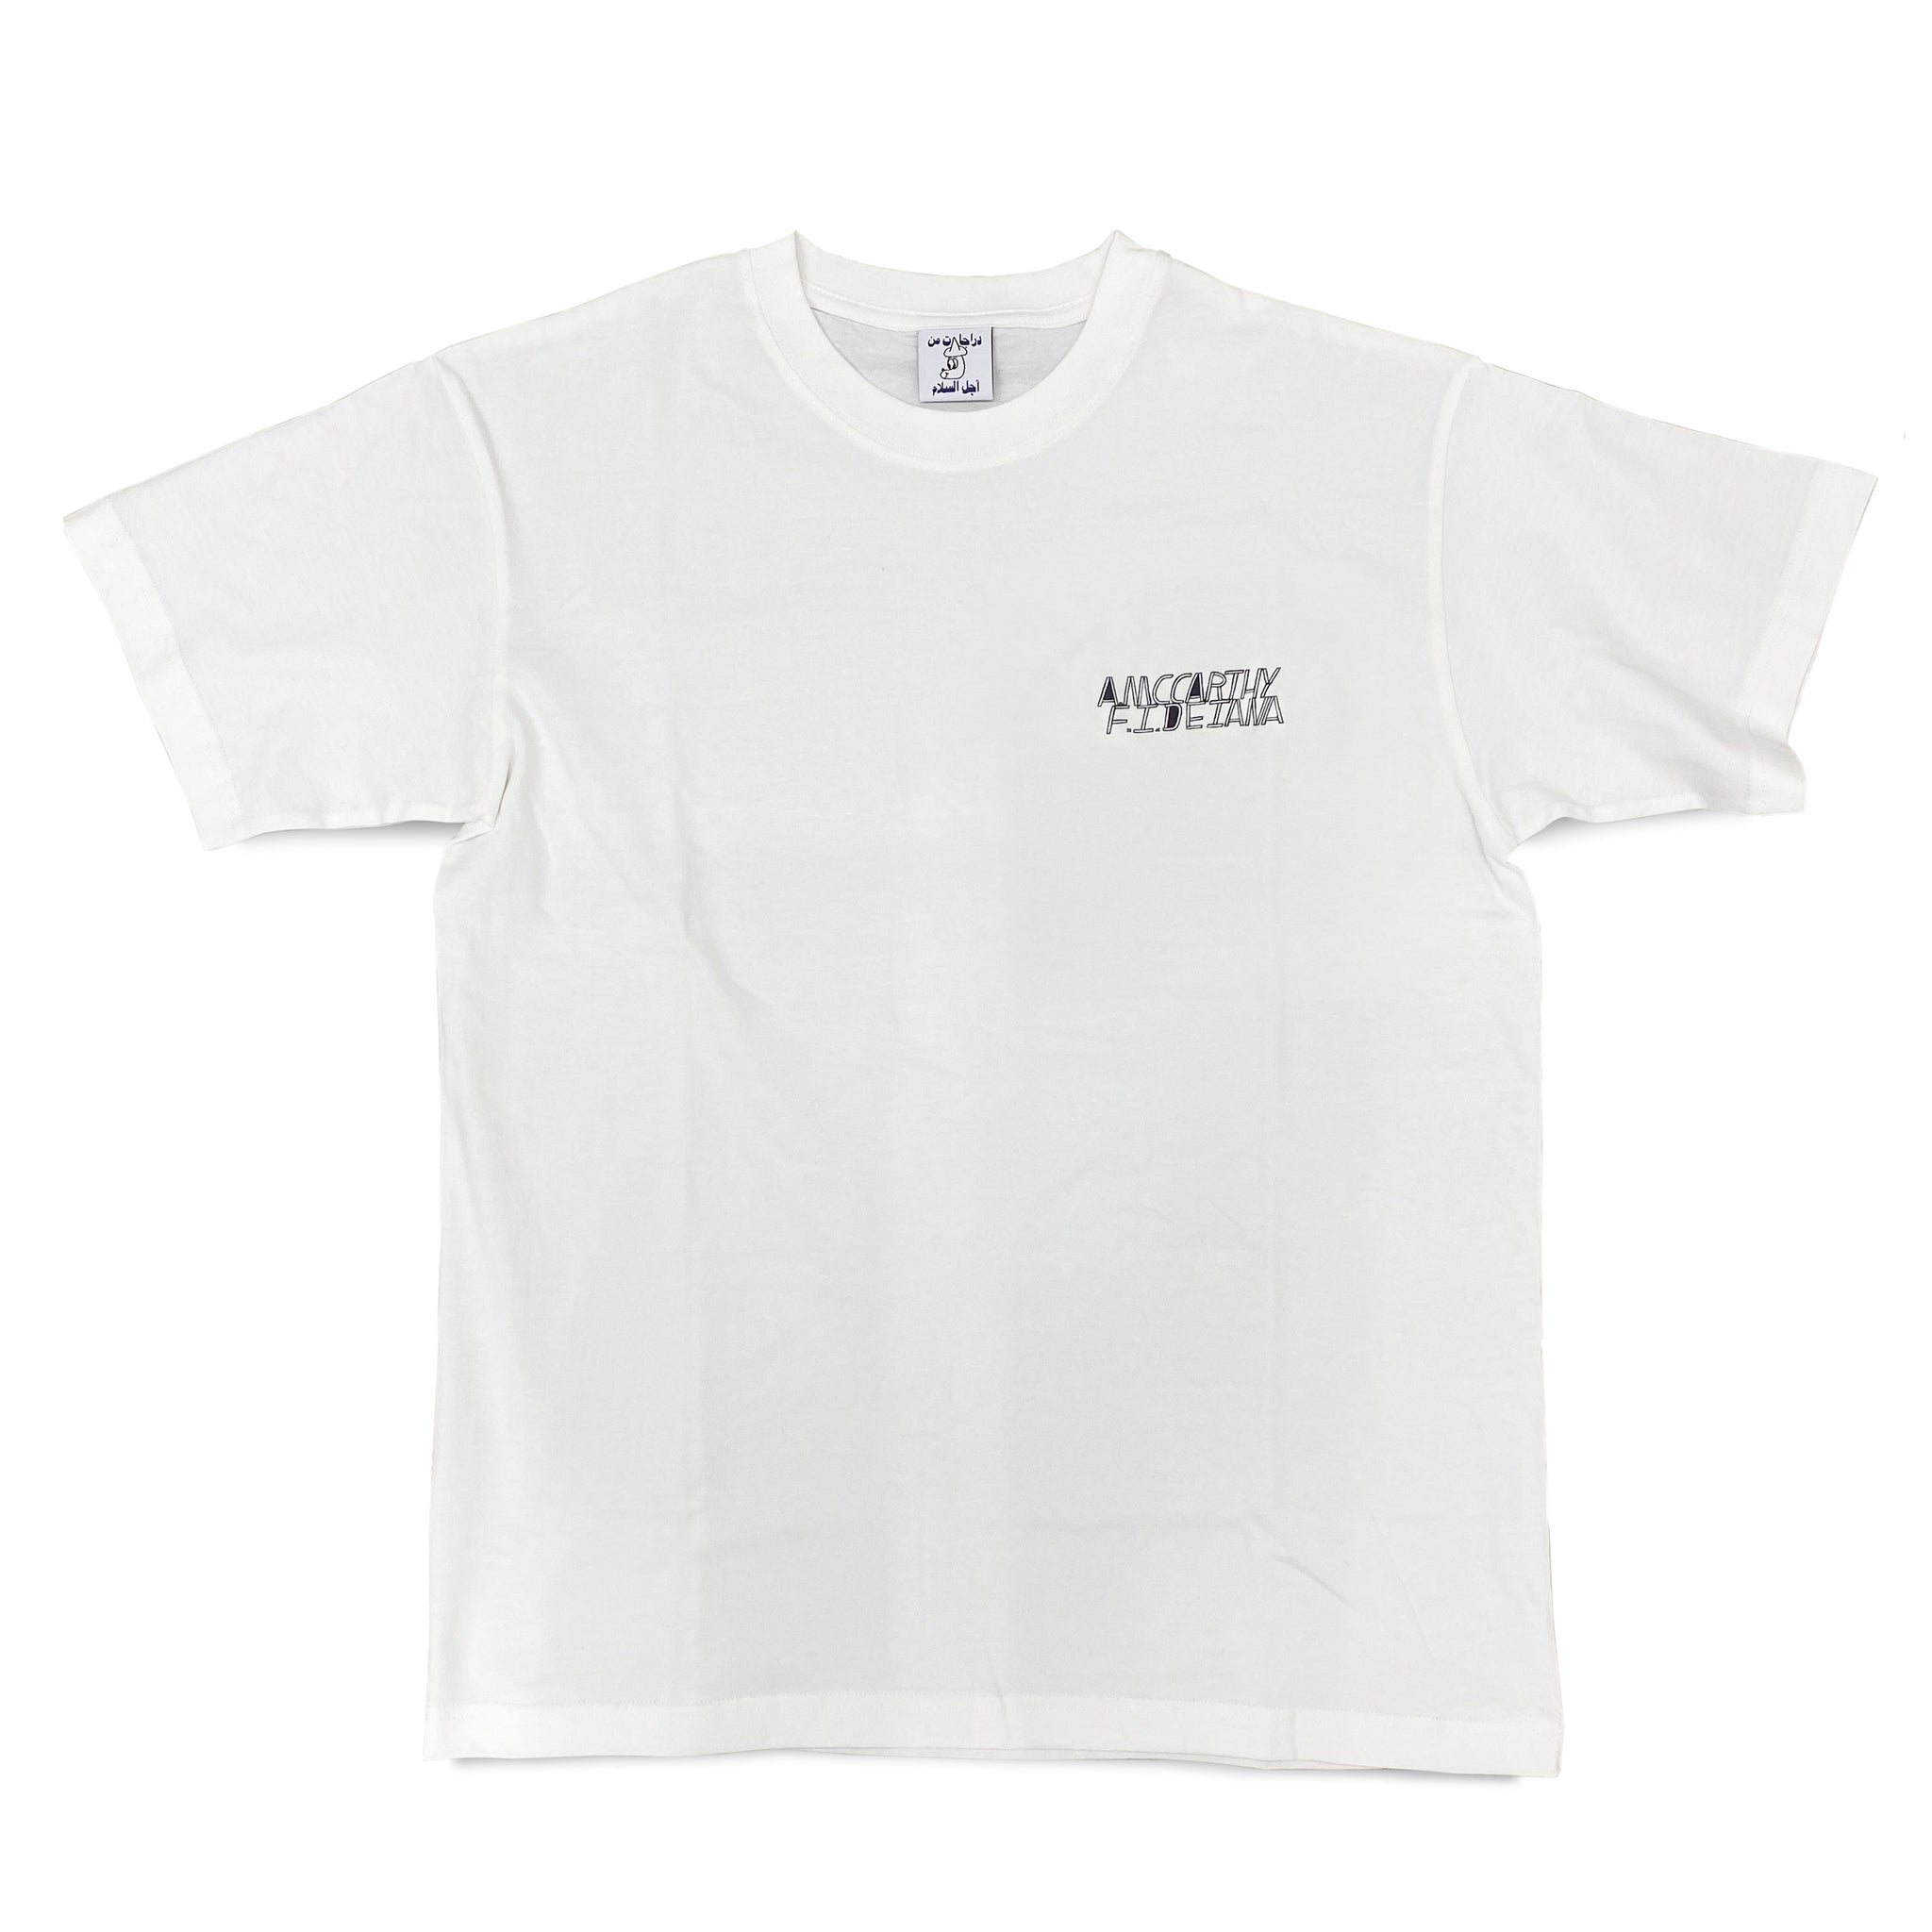 A. McCarthy × F. I. Deiana × S.F.P. T-shirt / White